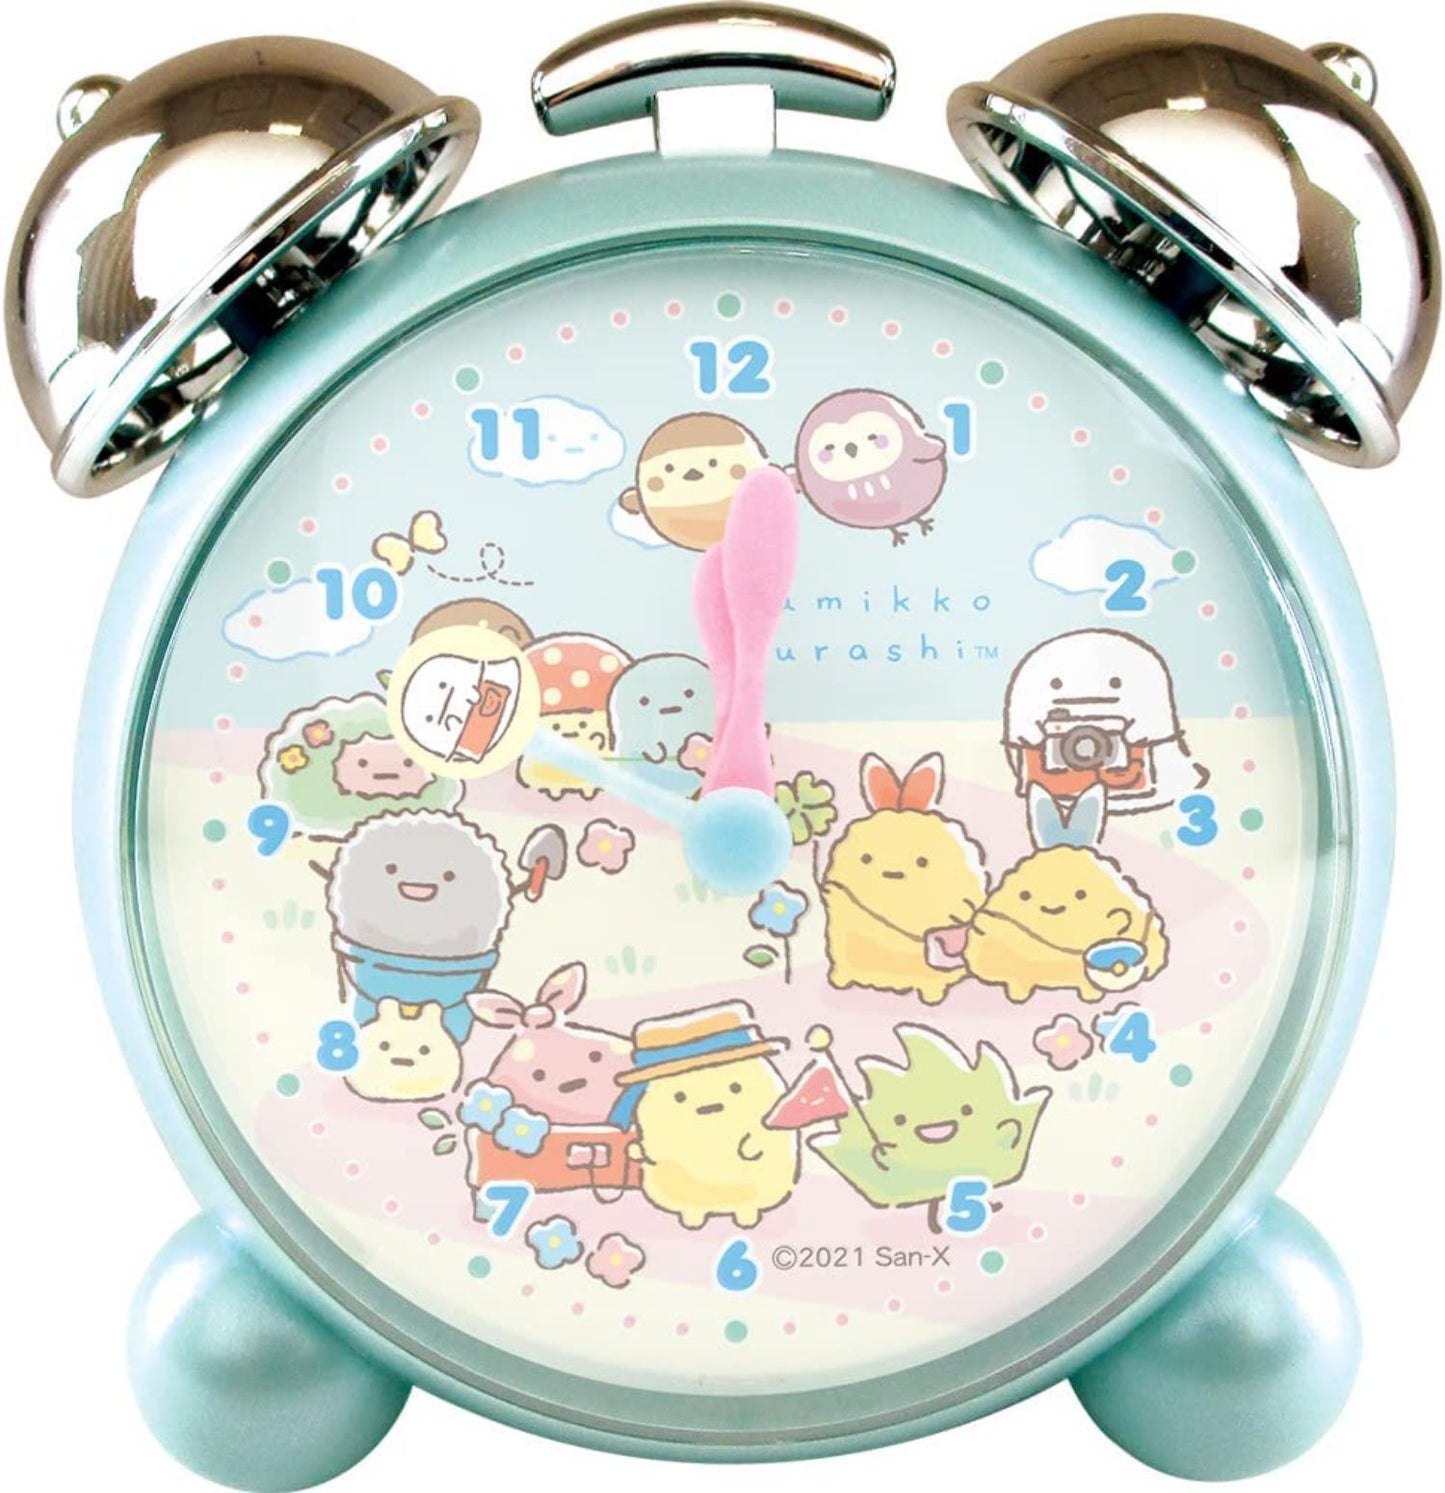 San-x Sumikko Gurashi, Minikko to Asobo, Bell Style Alarm Clock, Light Blue